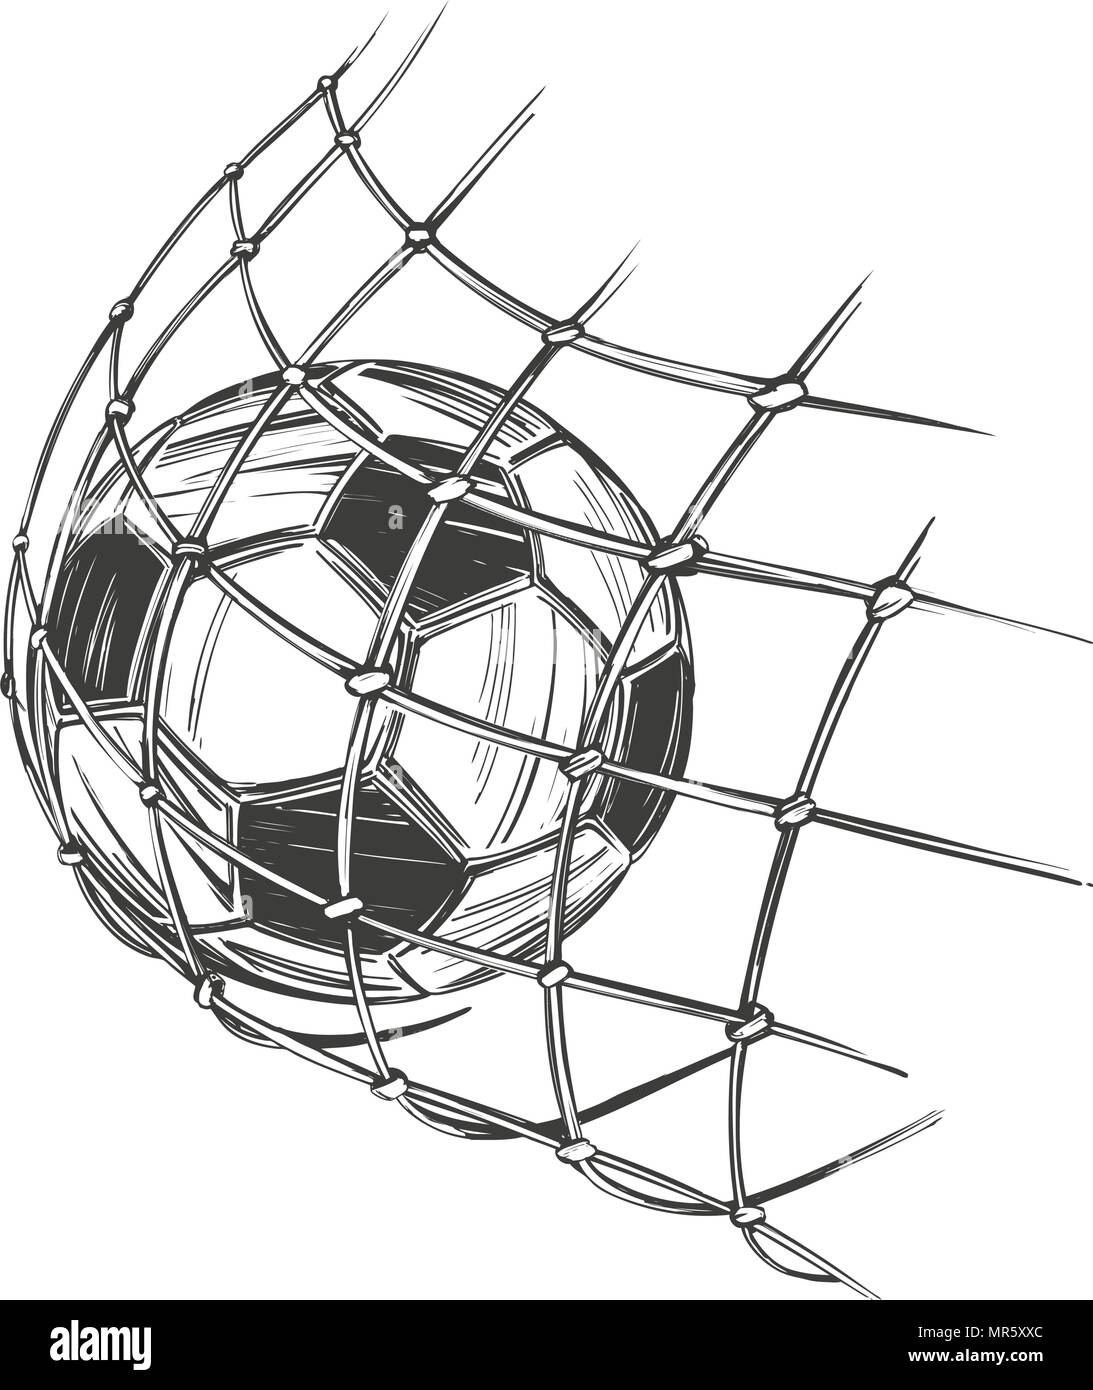 Fußball, Fußball, Sport Spiel, Emblem, Hand gezeichnet Vektor-illustration  Skizze Stock-Vektorgrafik - Alamy